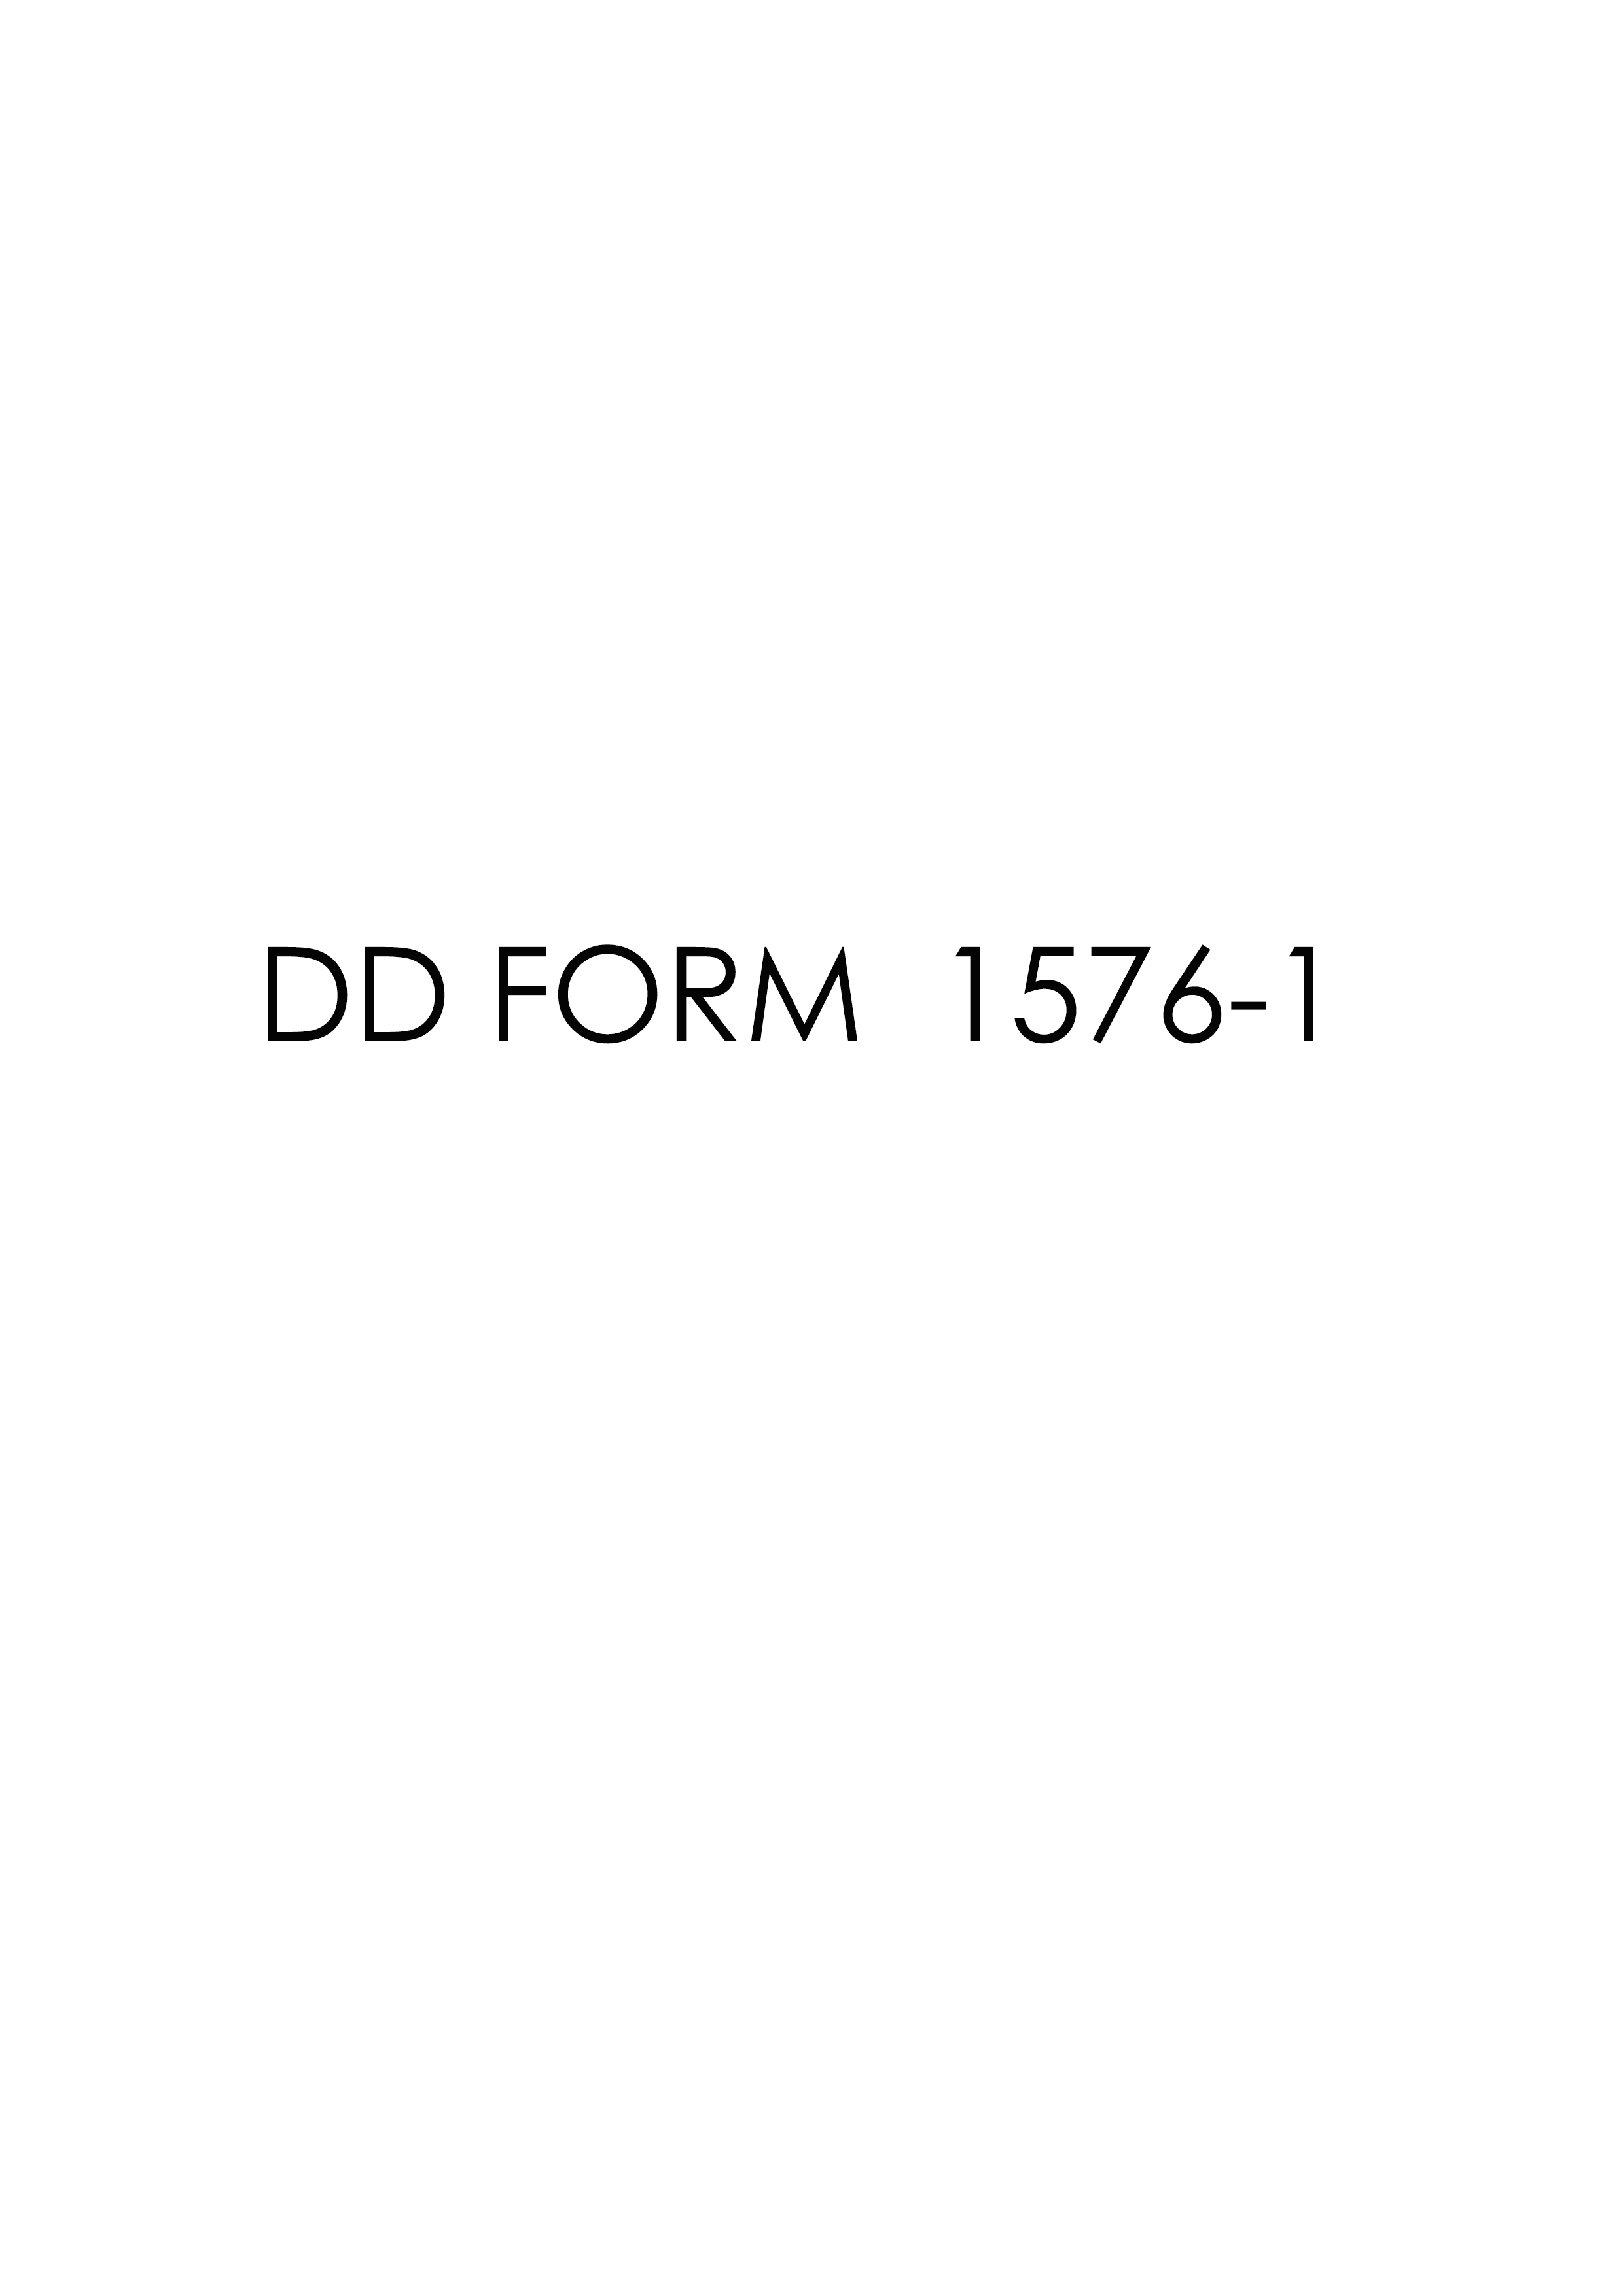 Download dd form 1576-1